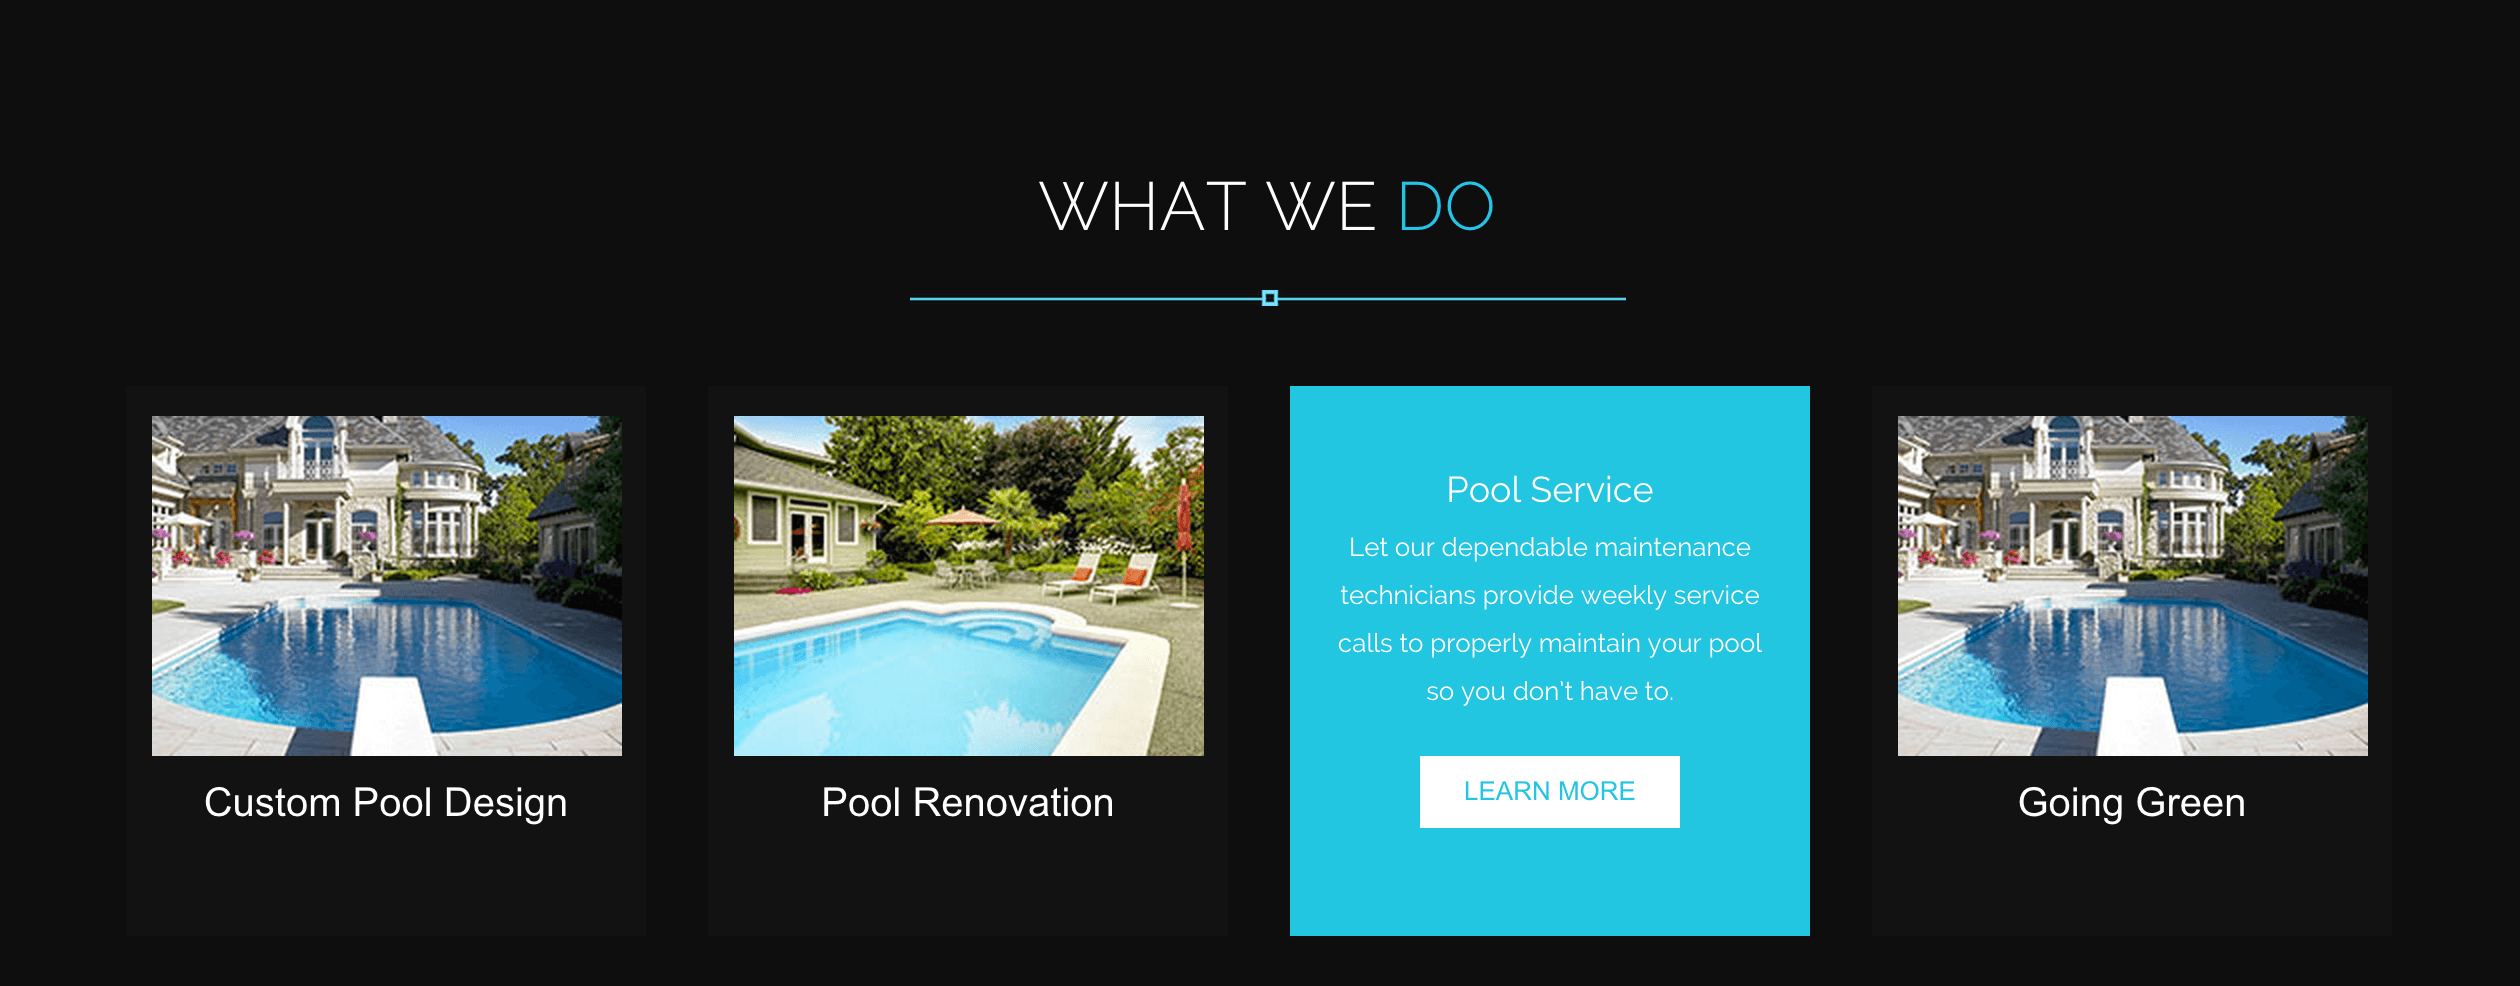 Pool Marketing Site Client Profile: Stewart Pools | Pool Marketing Site Digital Media and Inbound Marketing Agency Houston Texas